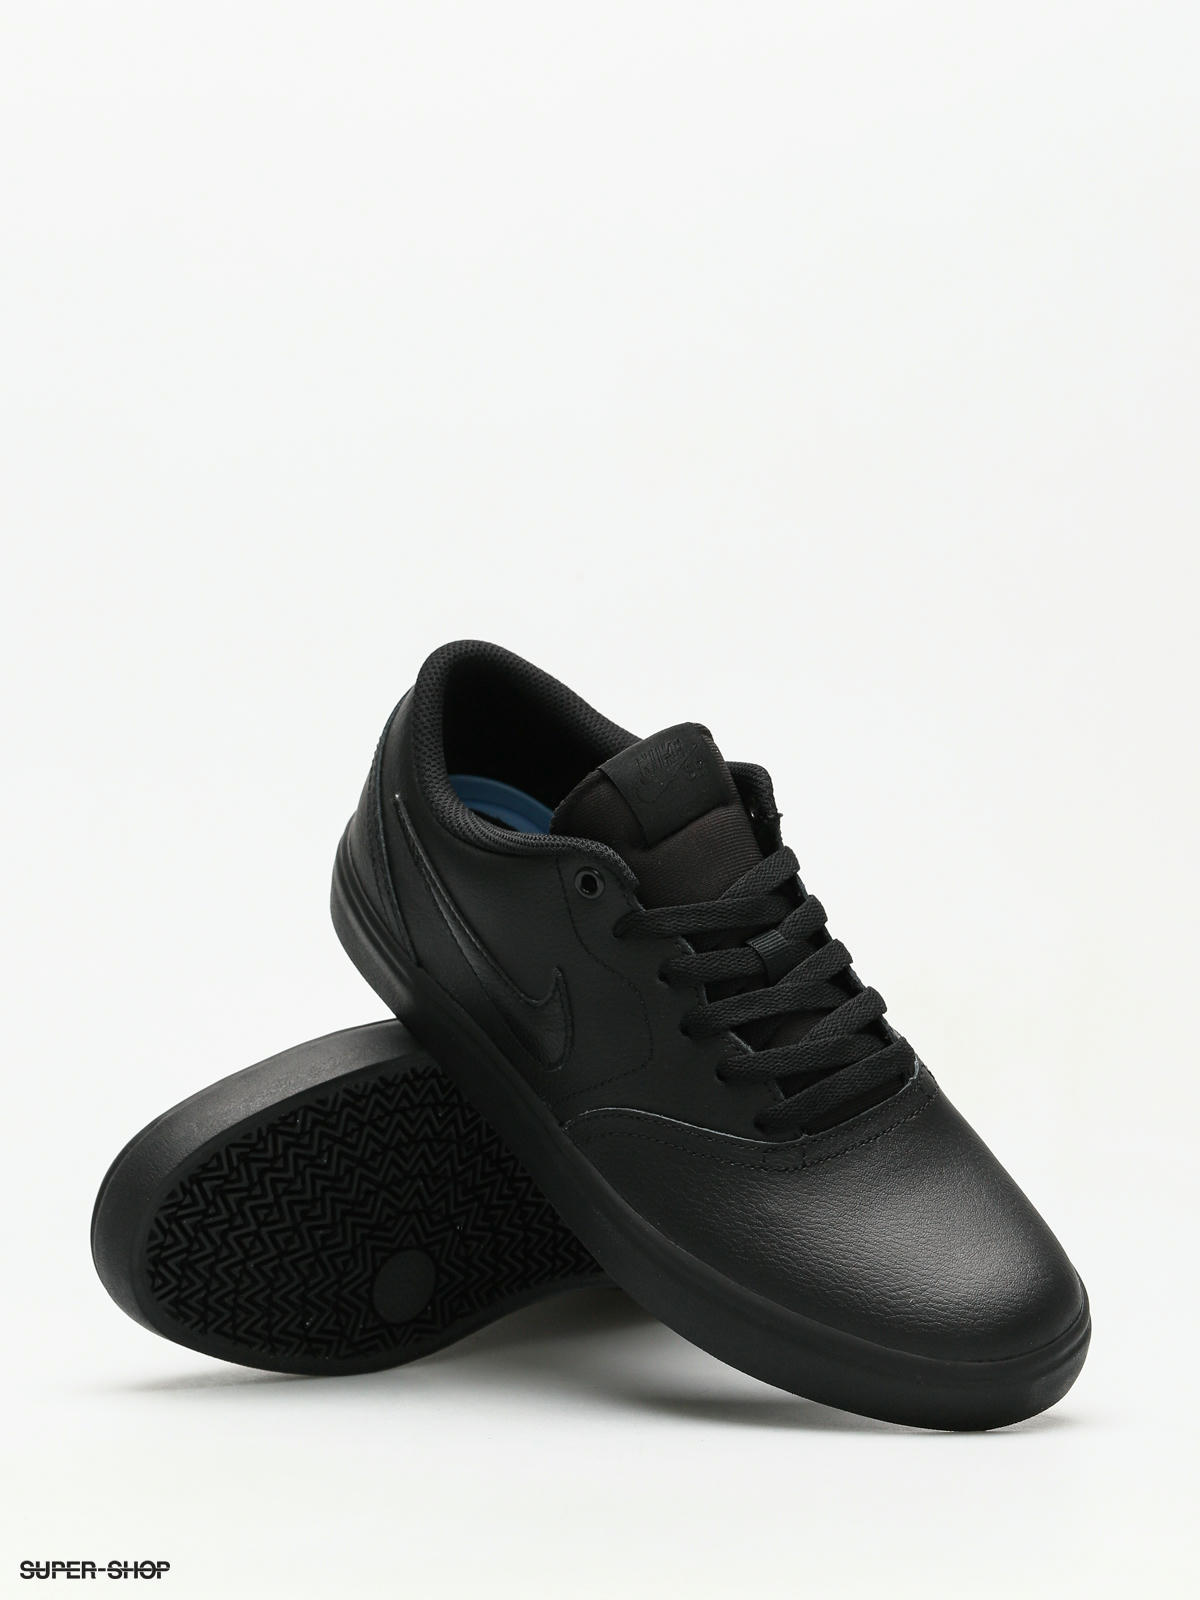 SB Shoes Sb Check Solarsoft (black/black black)